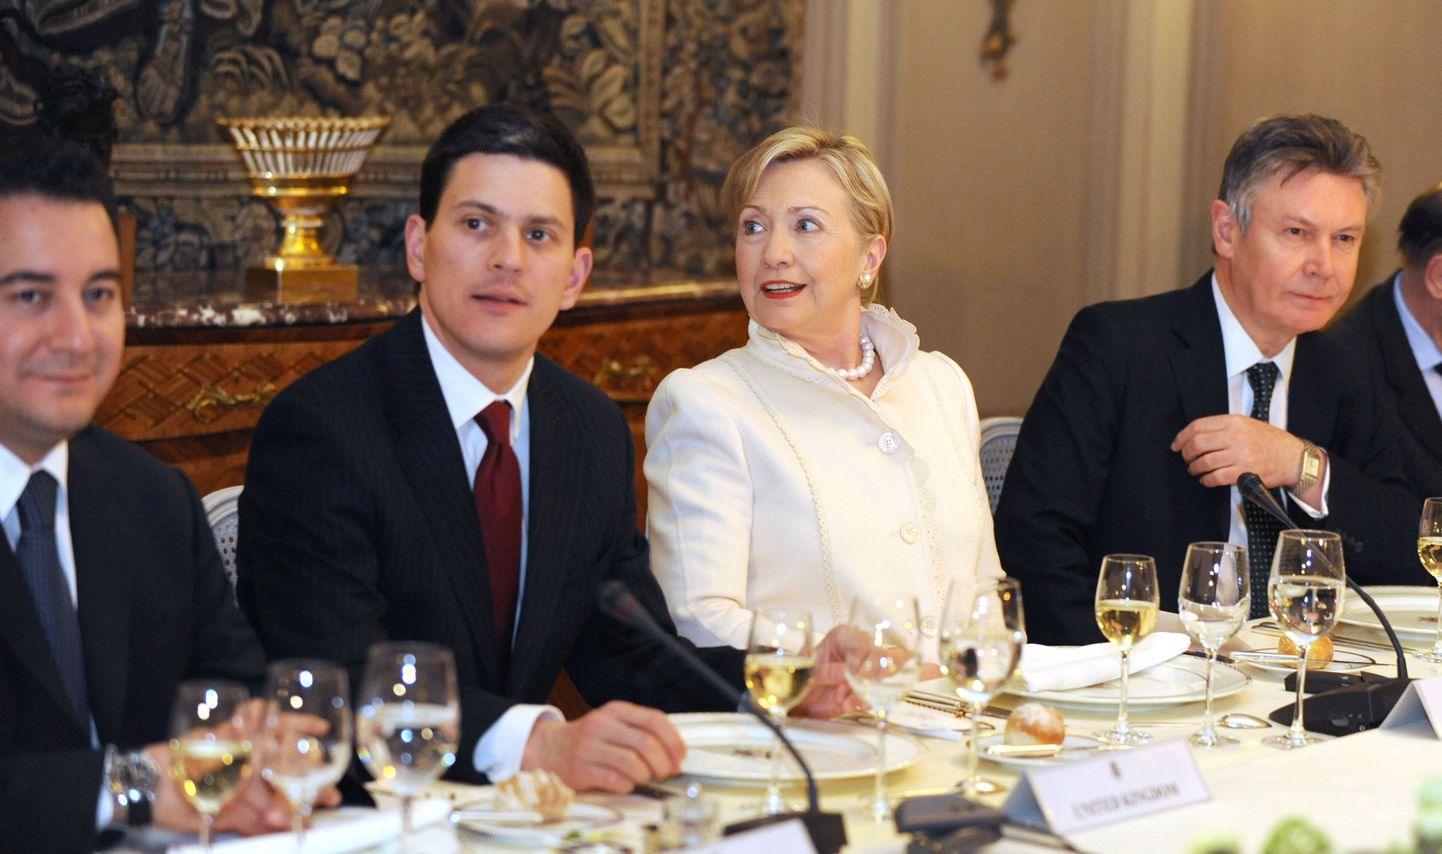 «Transatlantiline» õhtusöök Brüsselis, pildil (vasakult) Türgi välisminister Ali Babacan, Briti välisminister David Miliband, USA riigisekretär Hillary Clinton ja Belgia välisminister Karel de Gucht.